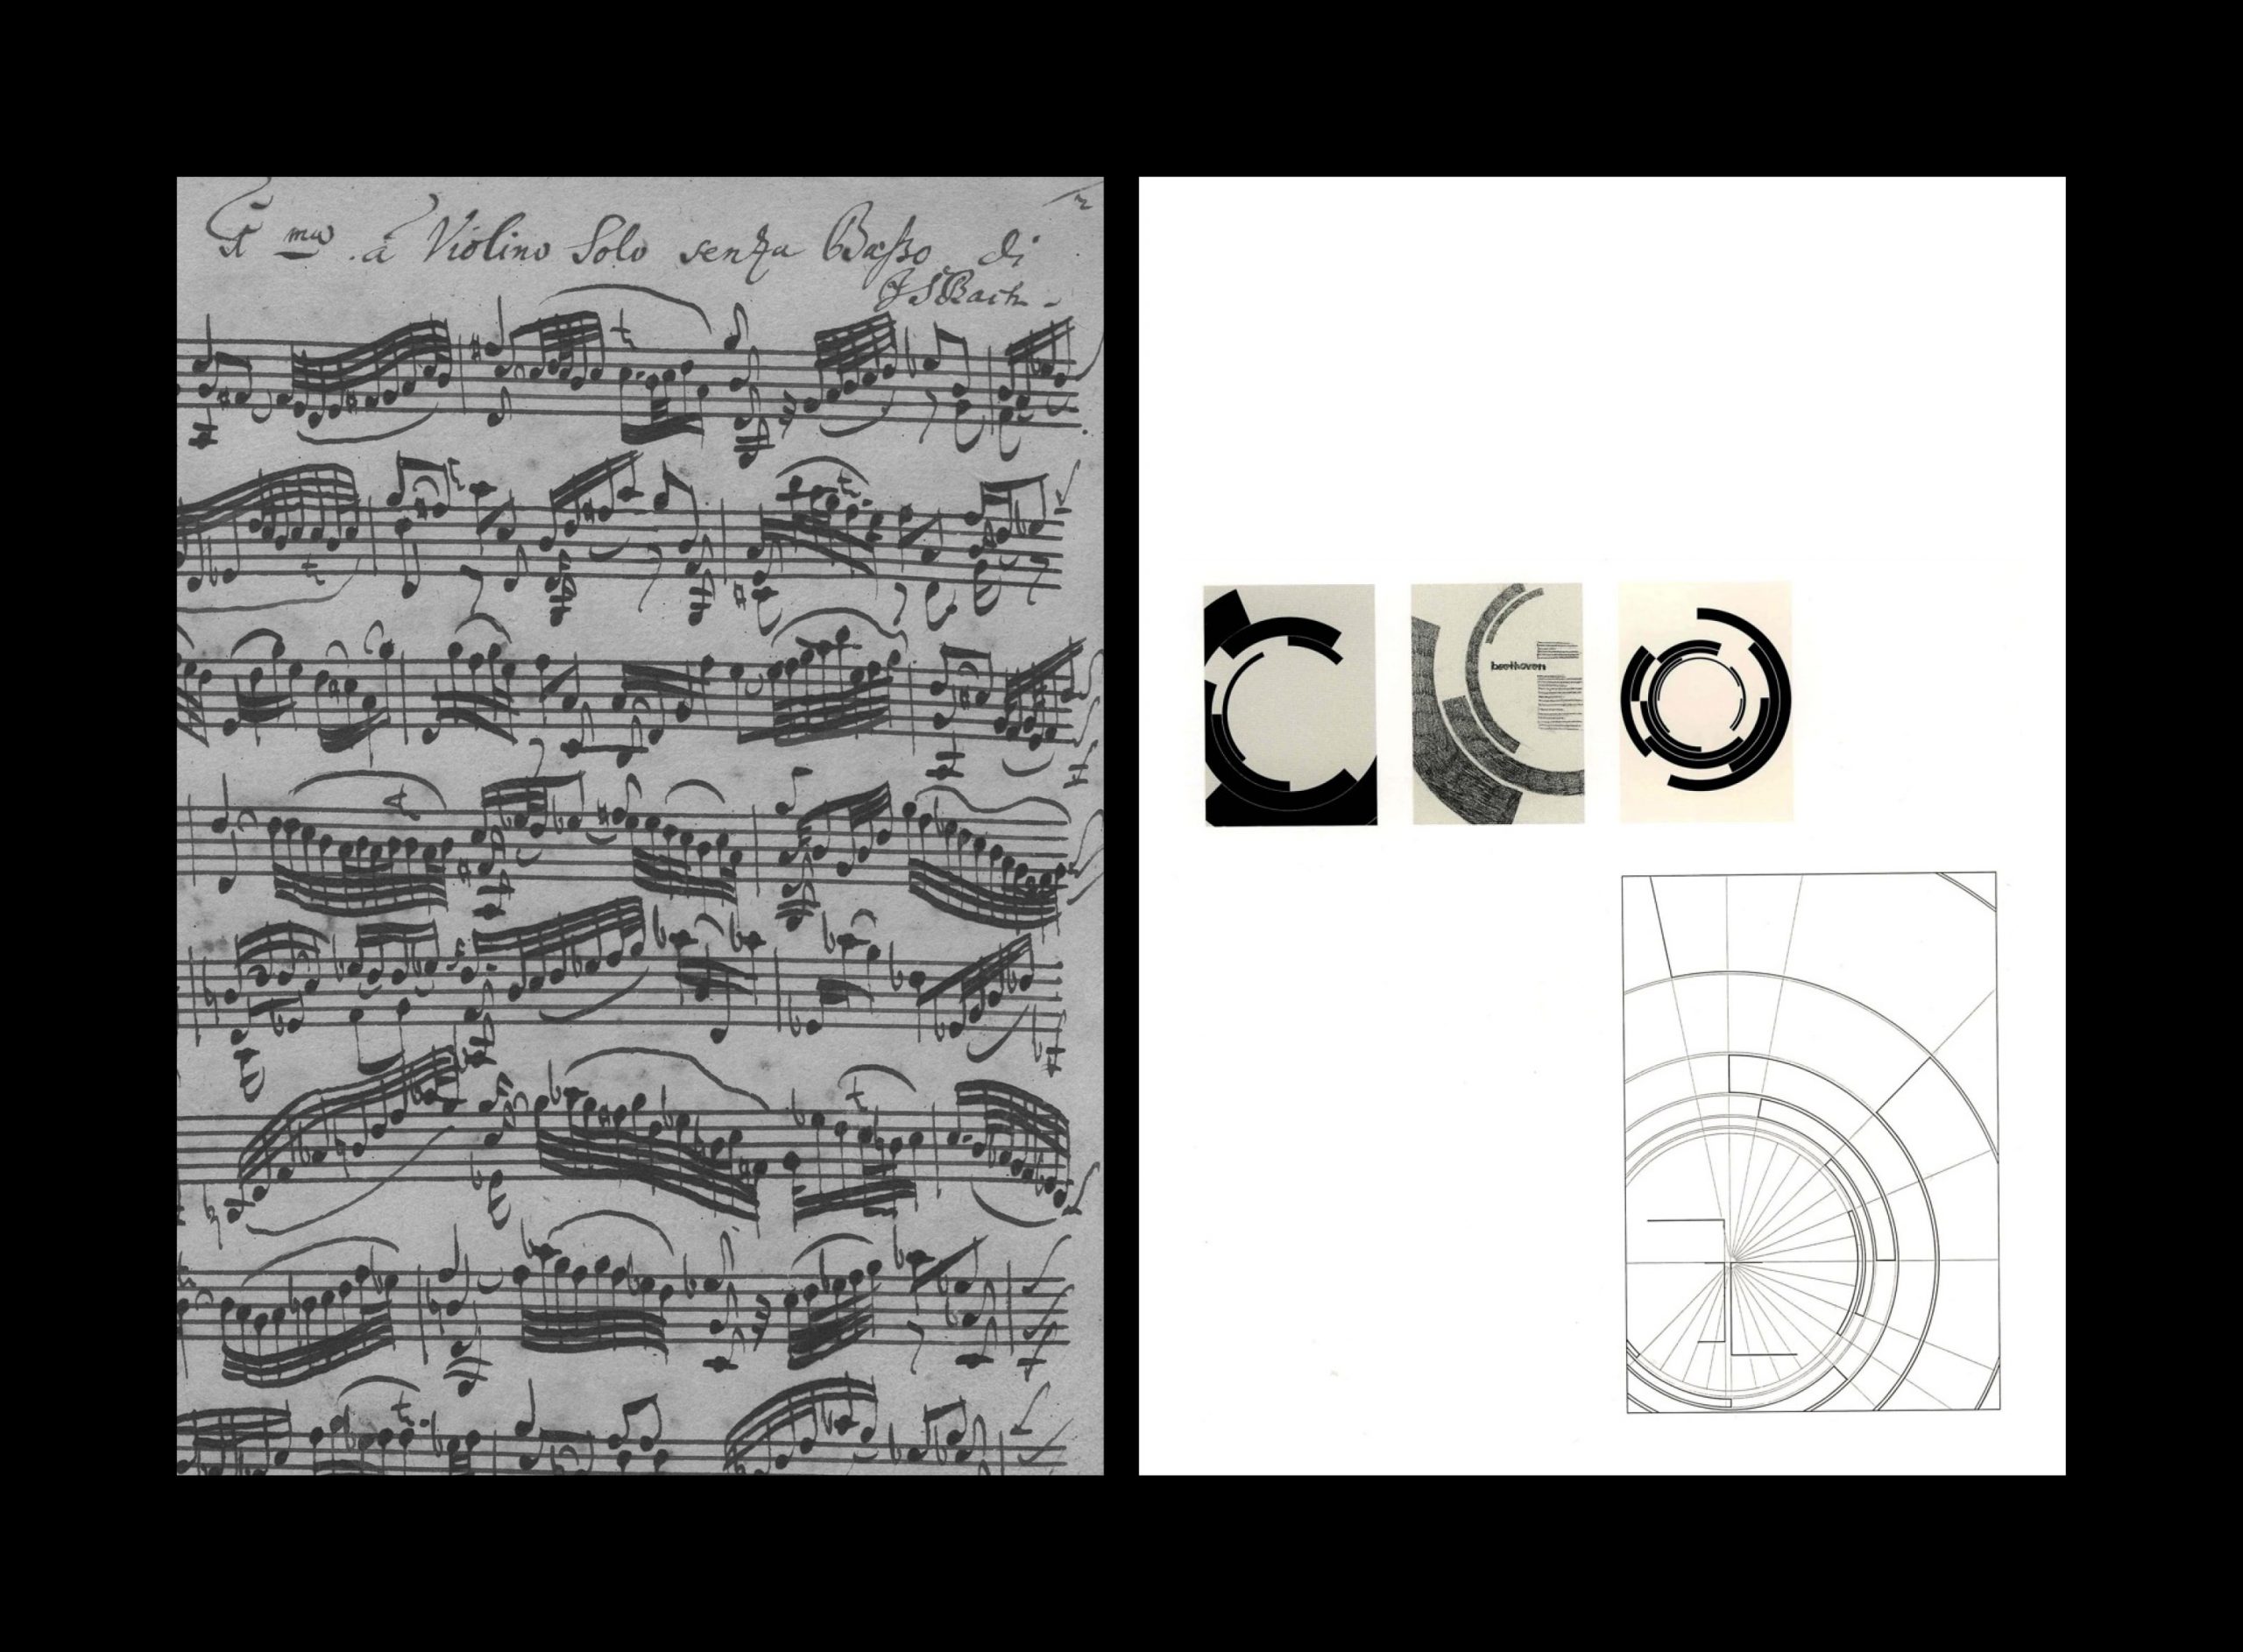 On the left: Johann Sebastian Bach, Sei Solo a Violino, Sonata 1,1685-1750. On the right: Josef Müller-Brockmann, Beethoven Poster, 1955.